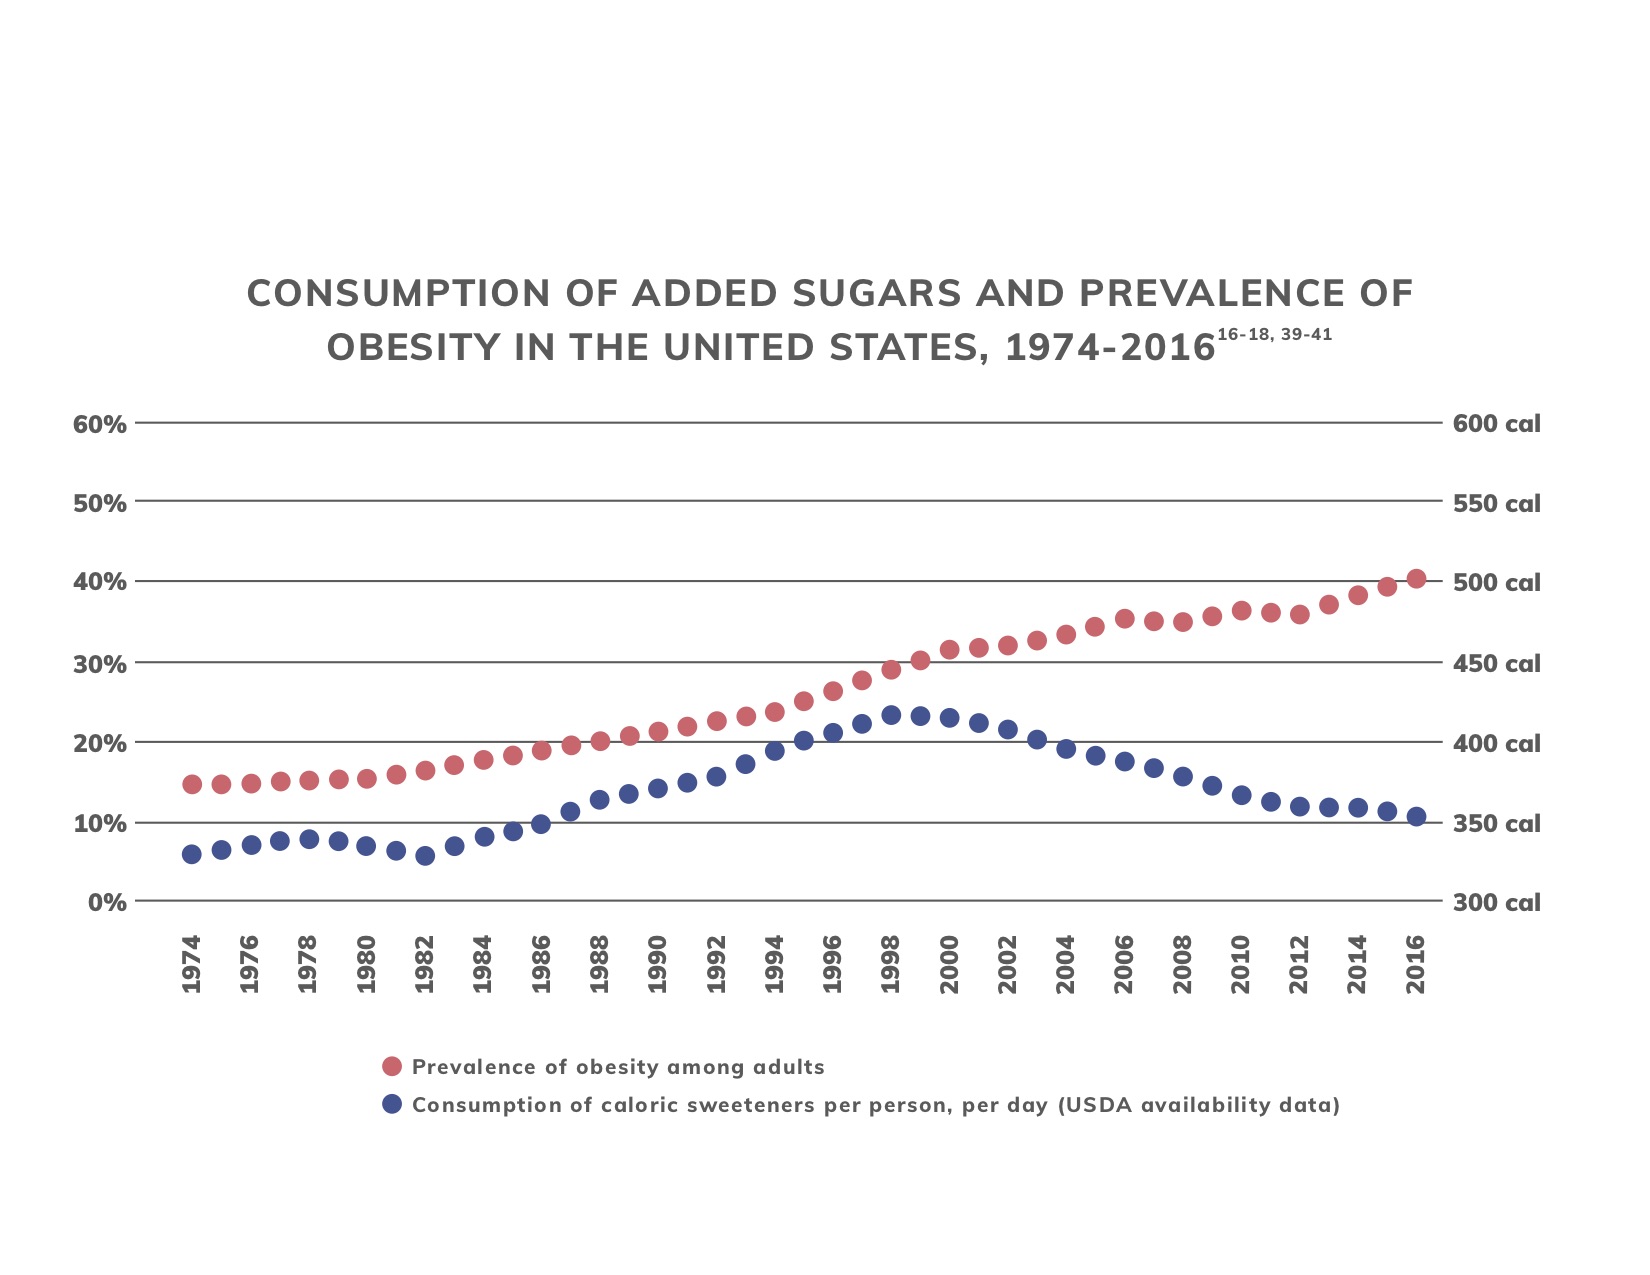 Consumption of added sugar